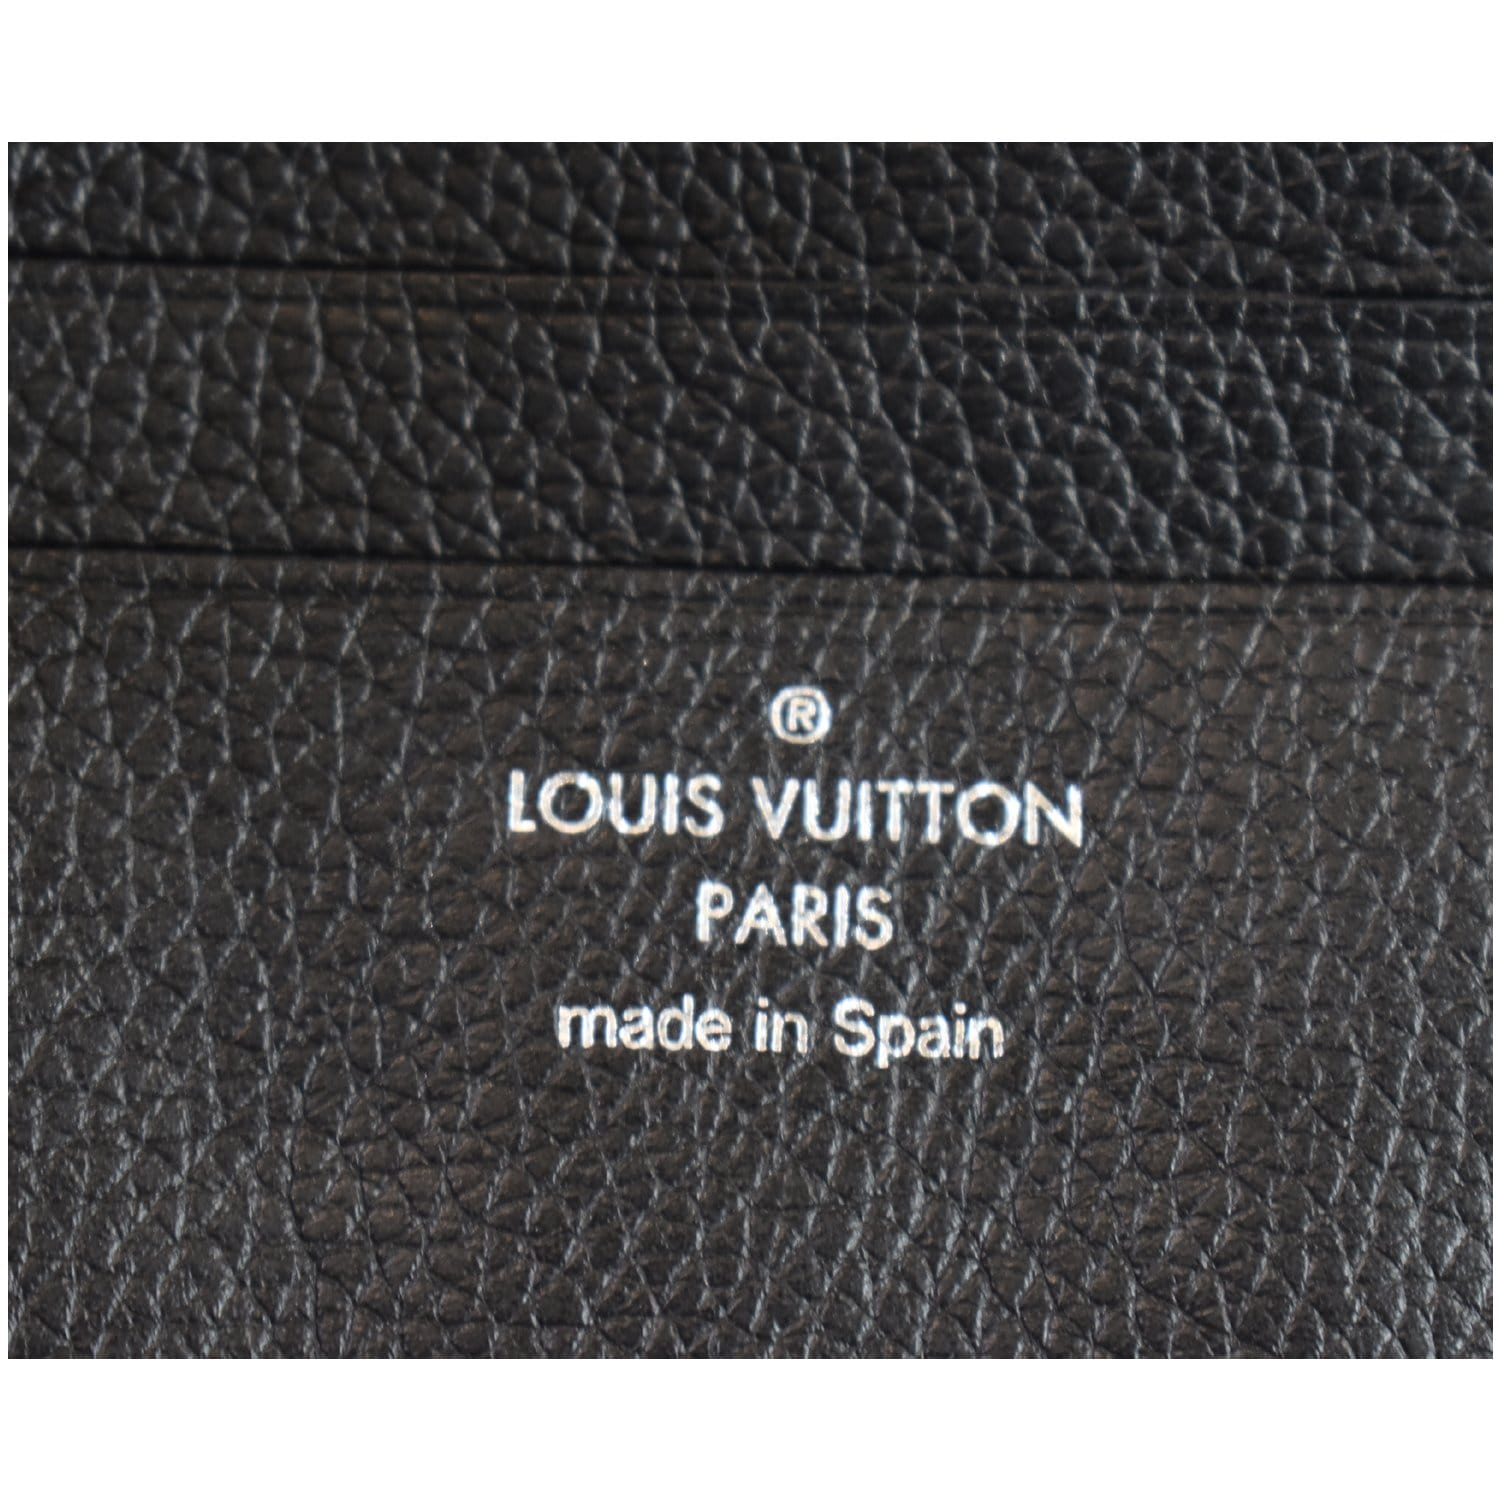 Shop Louis Vuitton LOCKME Nano lockme bucket (M68709) by CITYMONOSHOP